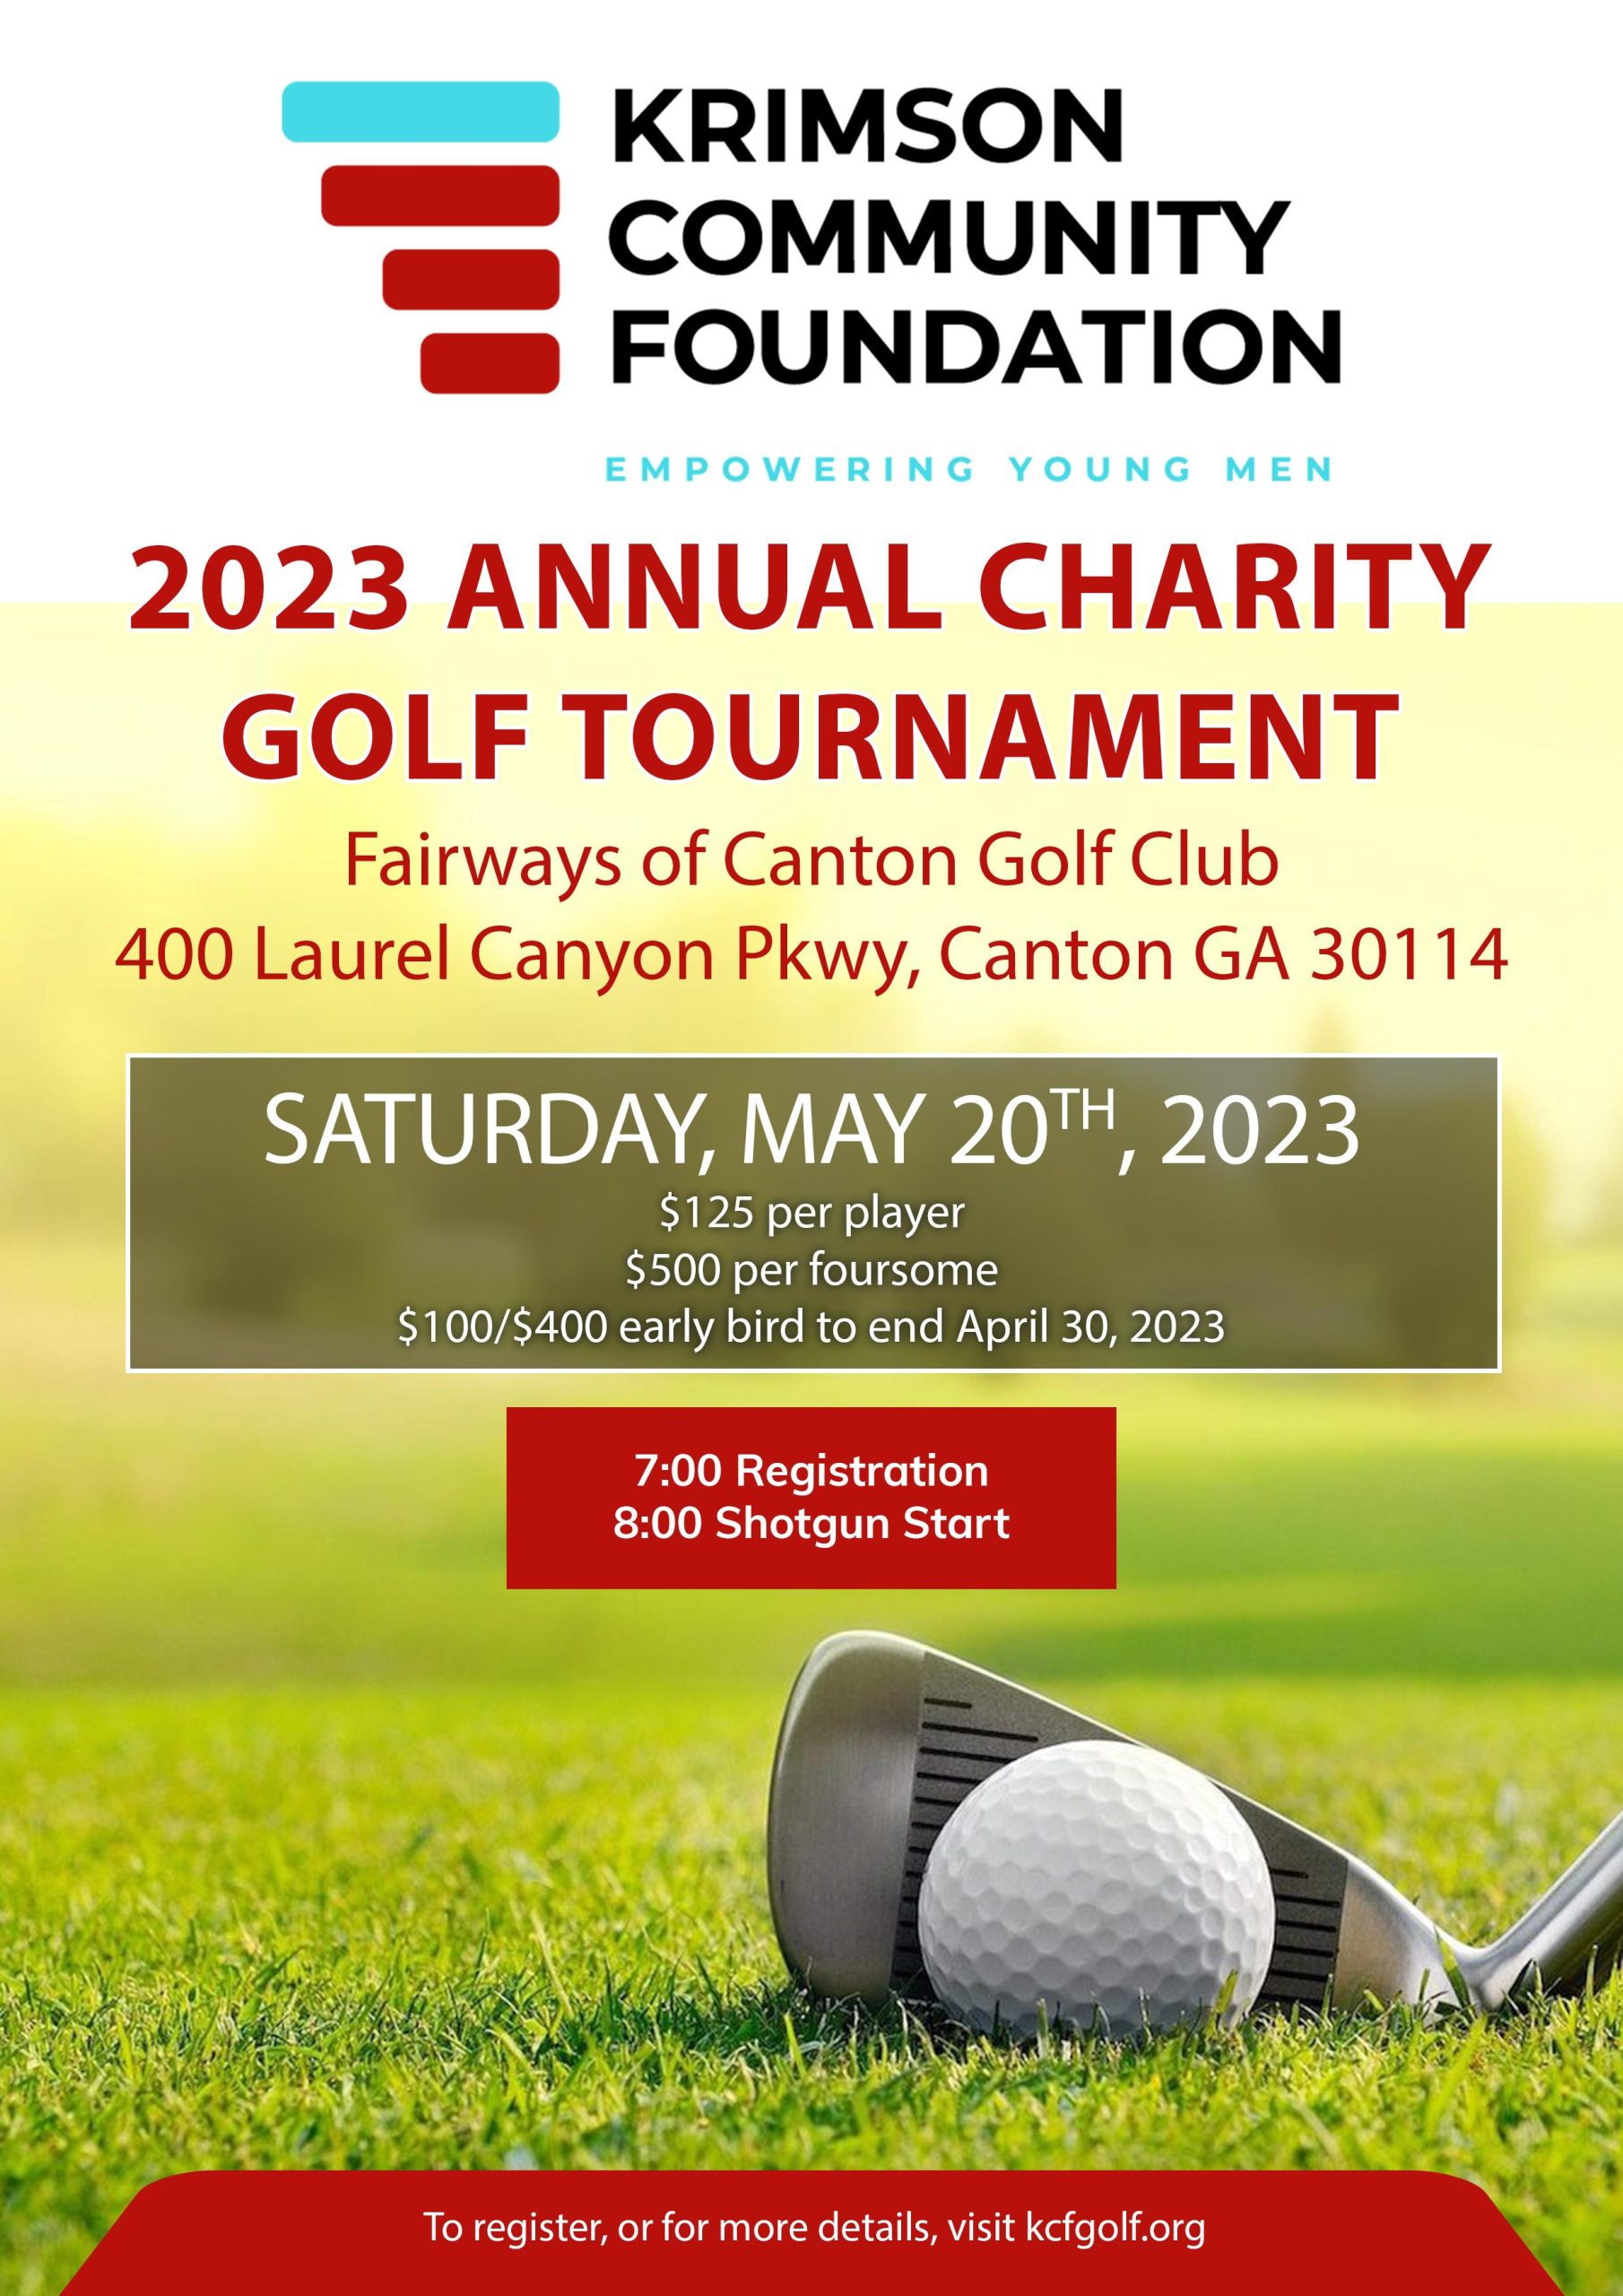 2023 Annual Krimson Community Foundation Charity Golf Tournament